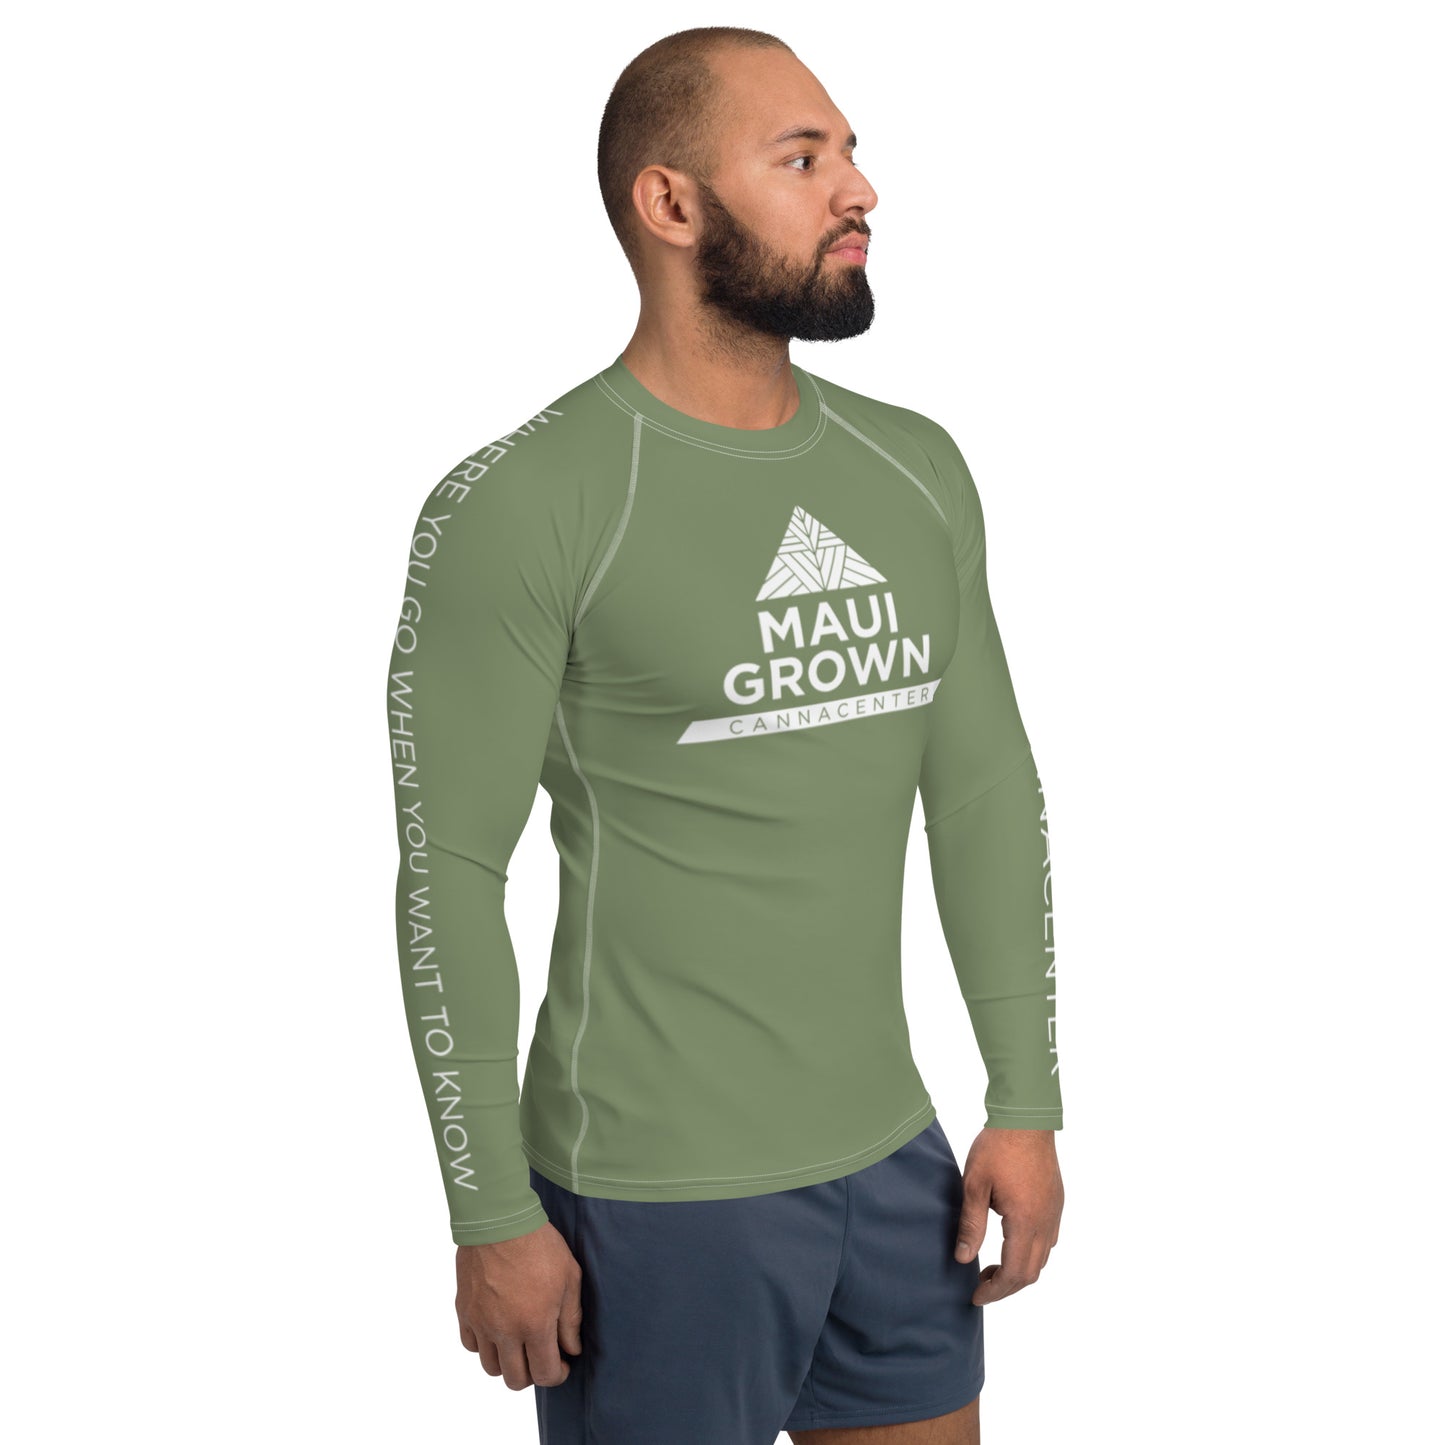 Maui Grown Cannacenter Men's Sublimated Rash Guard - Camouflage Green